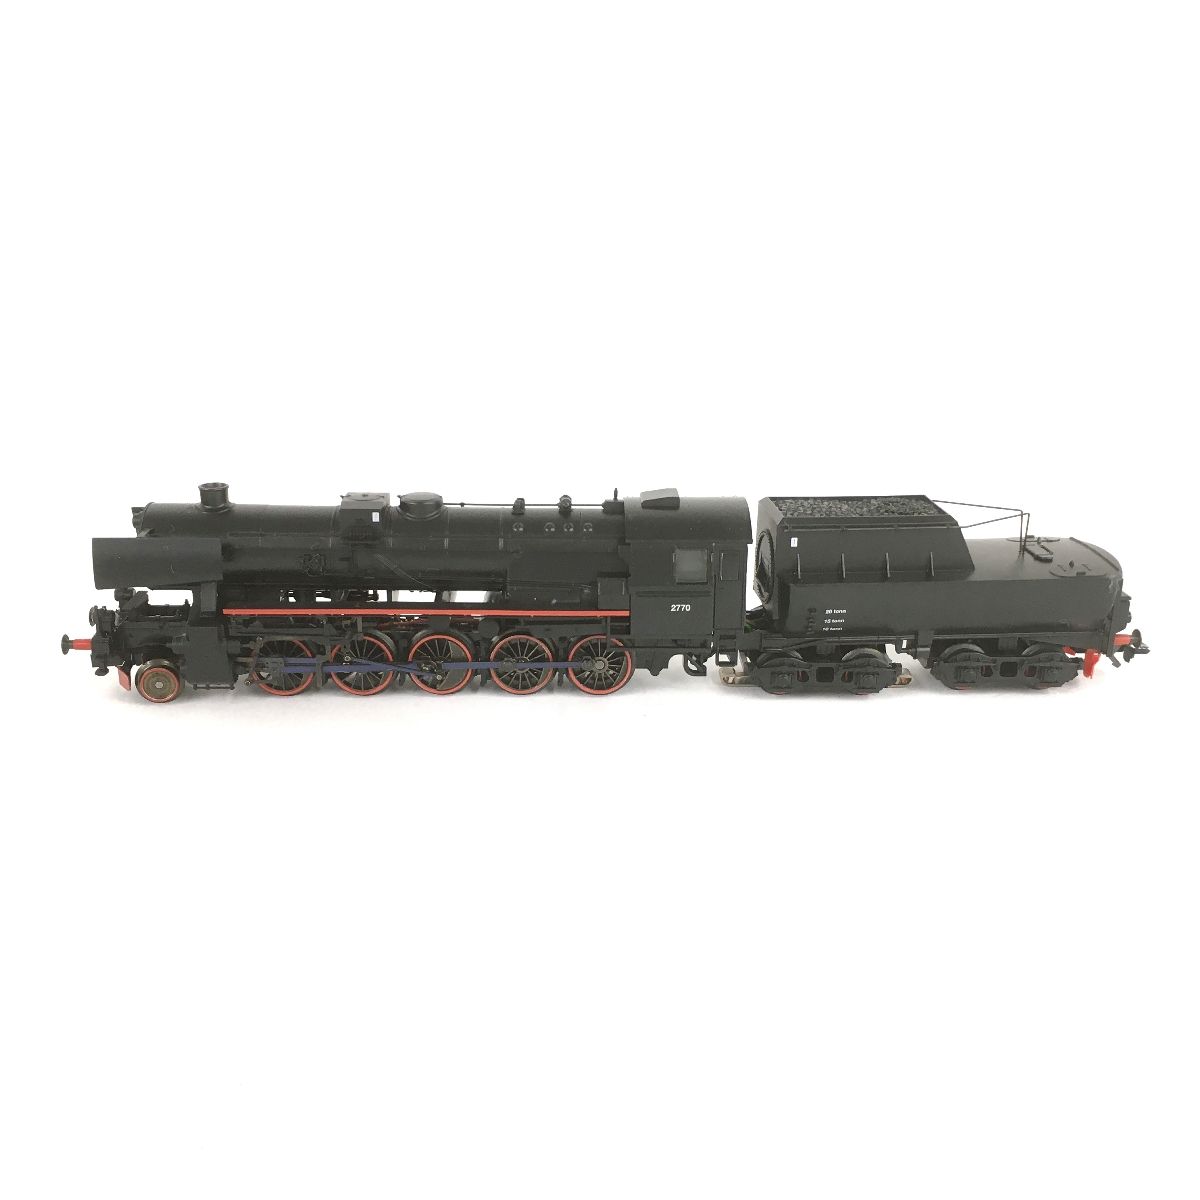 Marklin メルクリン 3417 蒸気機関車 HOゲージ 鉄道模型 ジャンク 